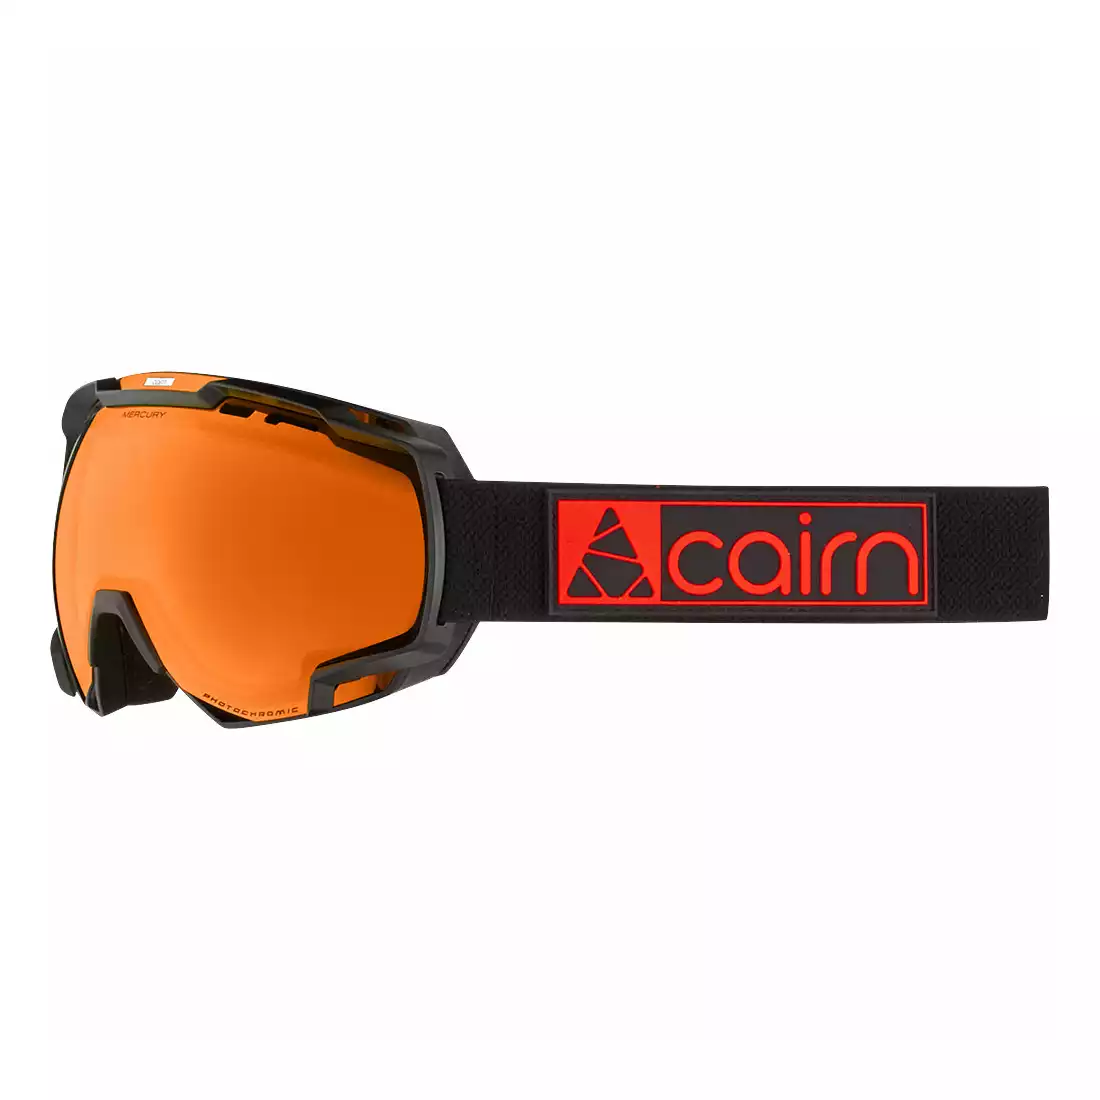 CAIRN MERCURY EVO NXT PRO Ski / snowboard goggles, black and orange